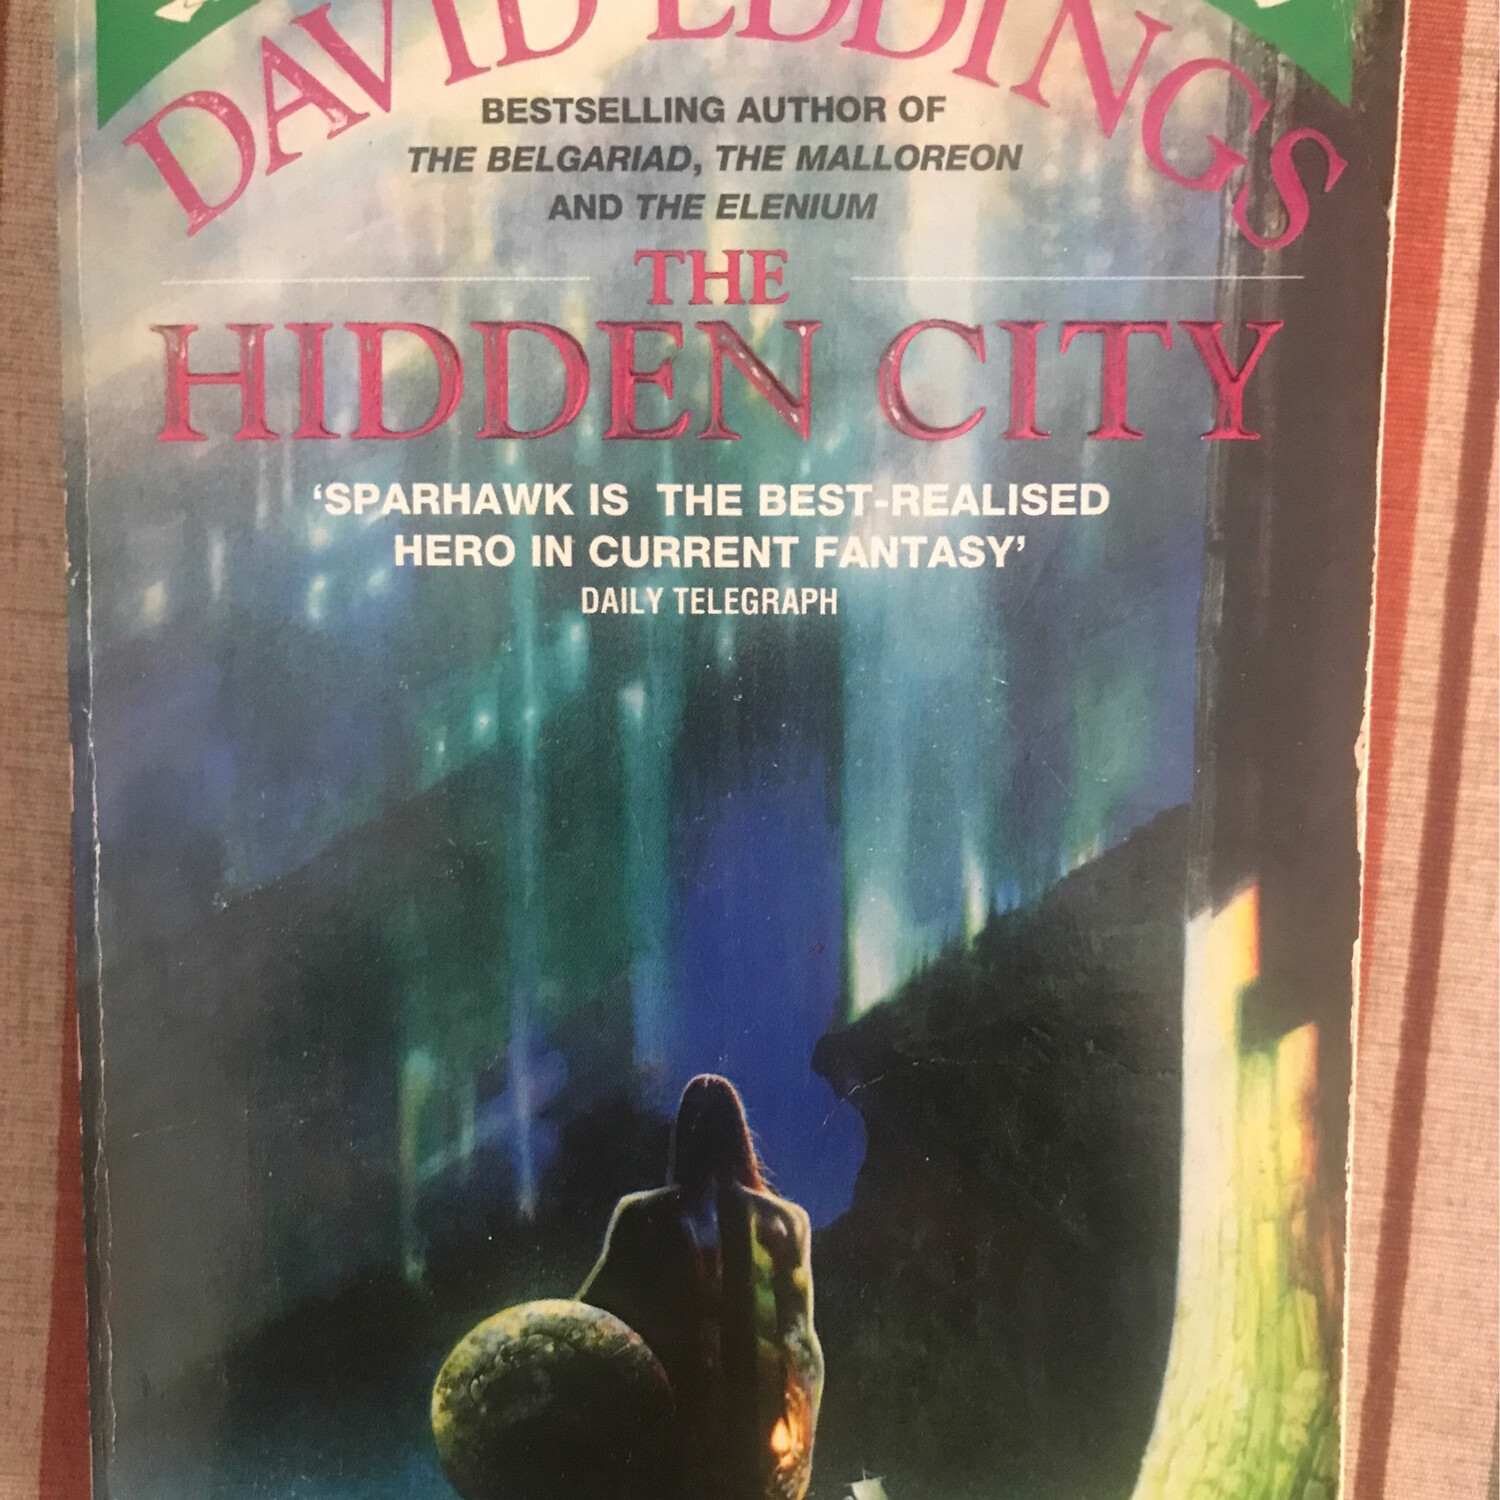 The Hidden City, David Eddings